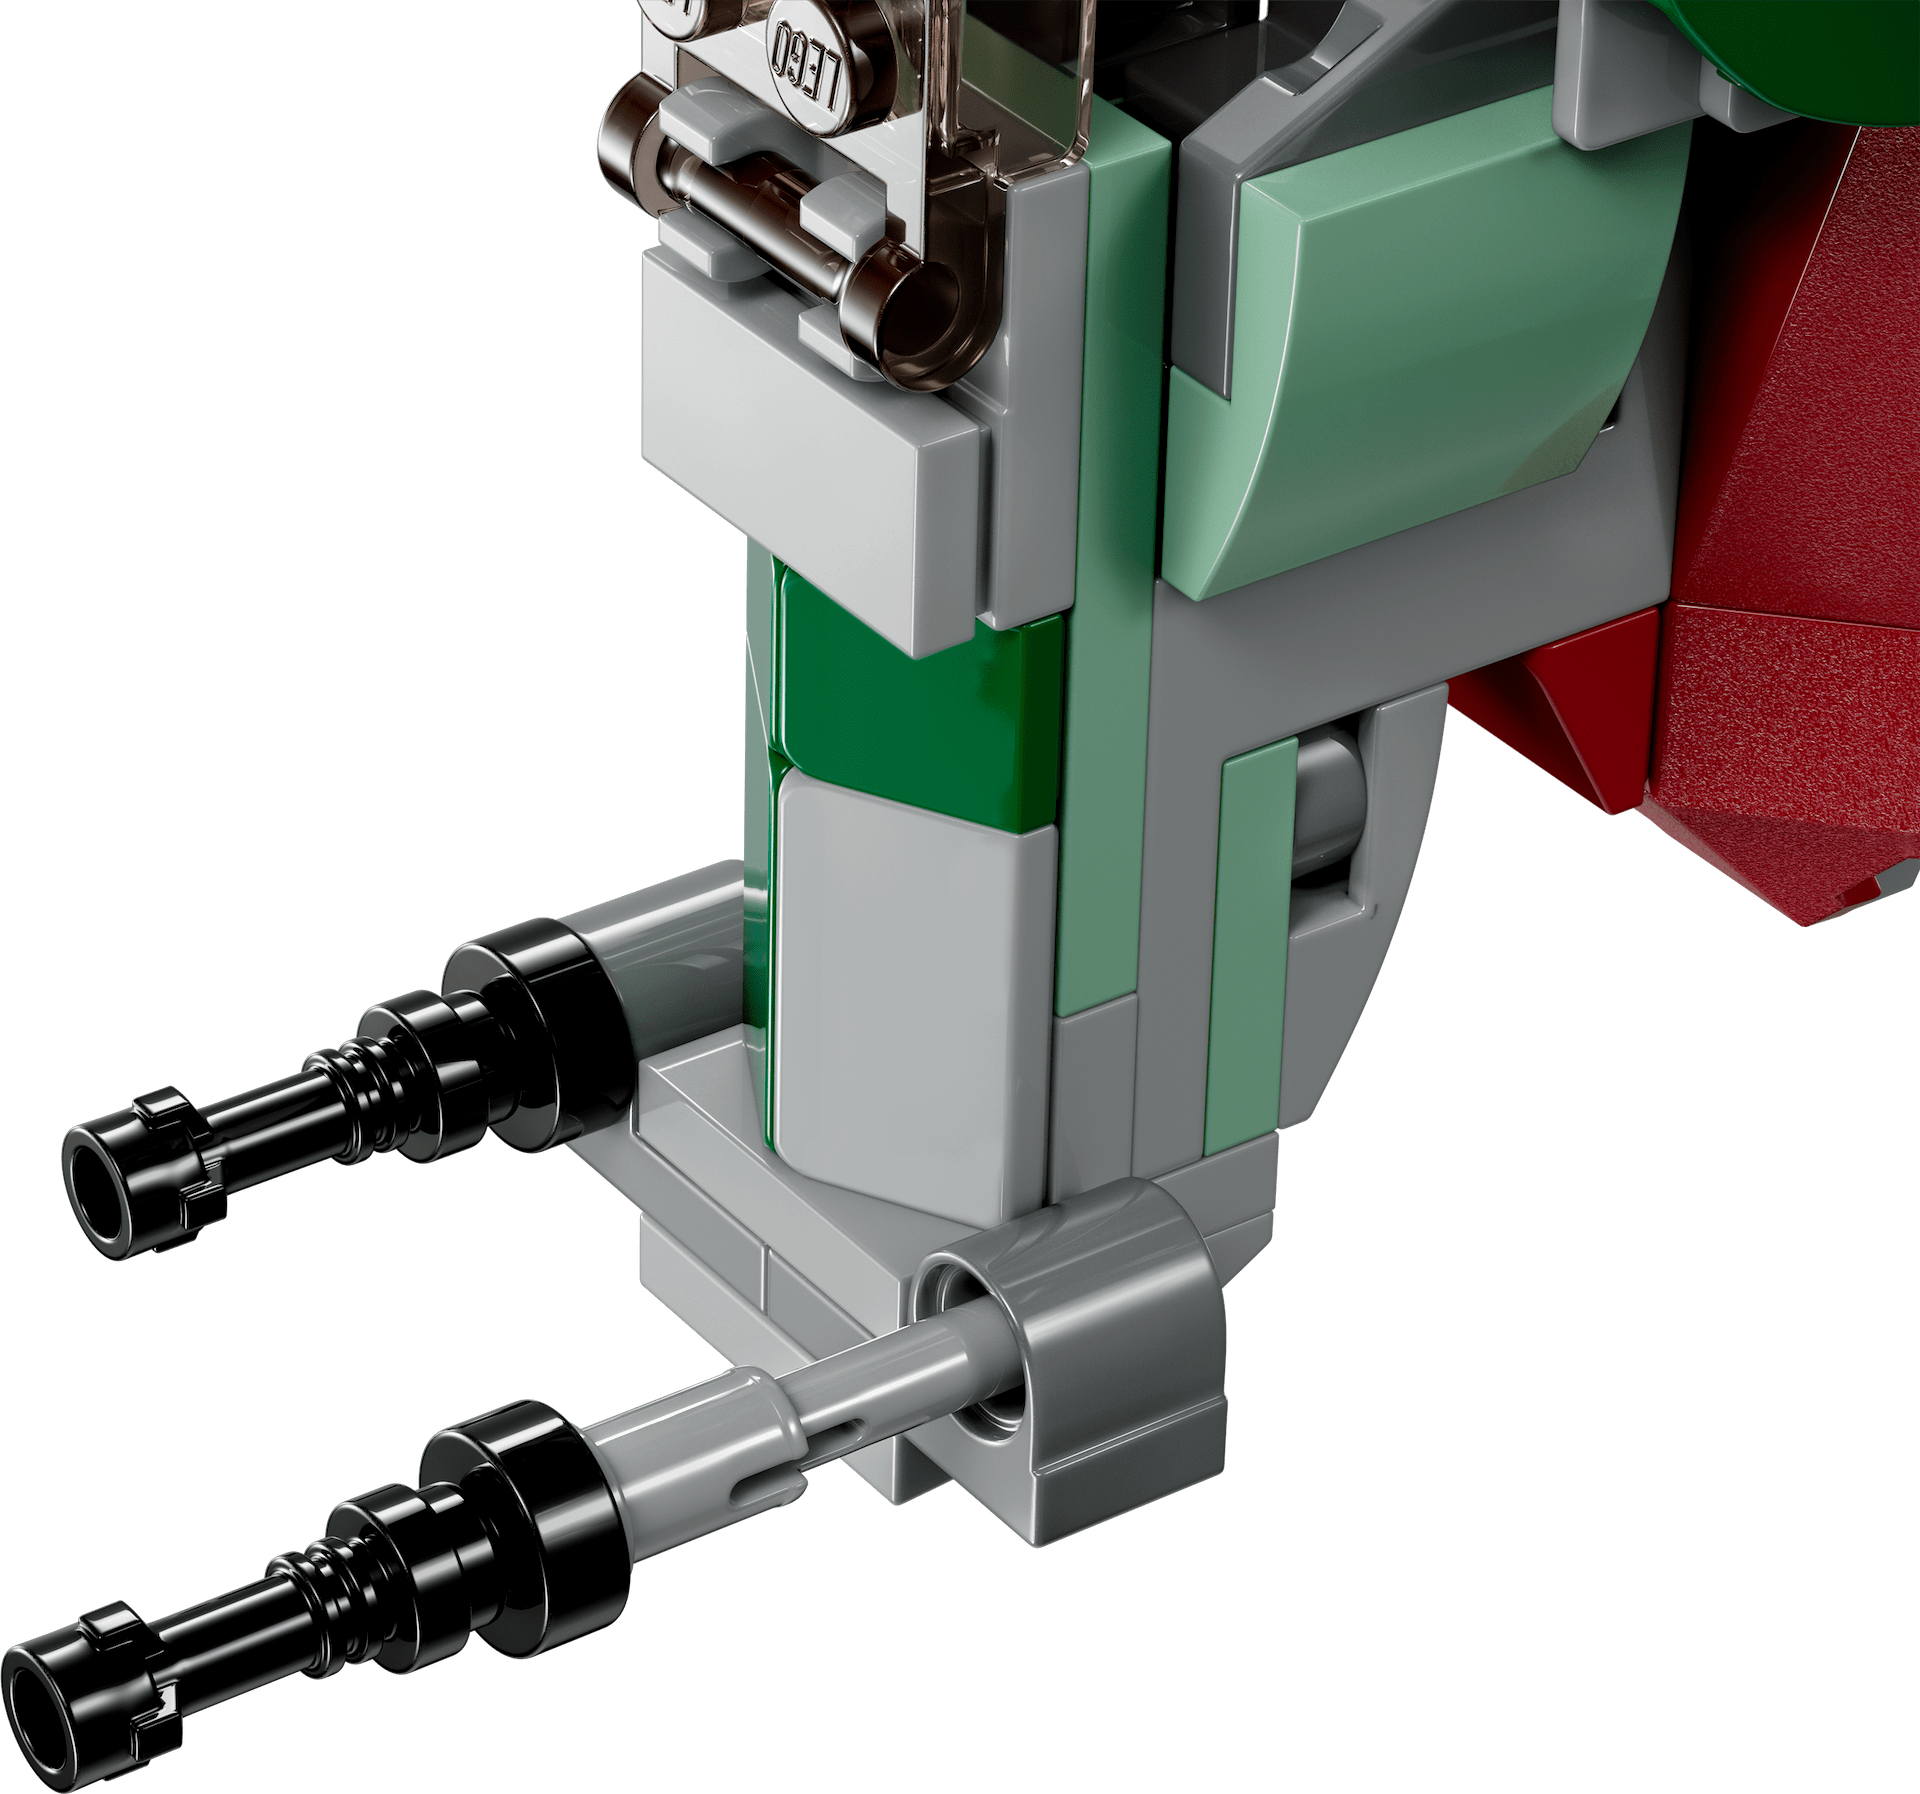 LEGO Boba Fett's Starship Microfighter (75344) - Boba Fett